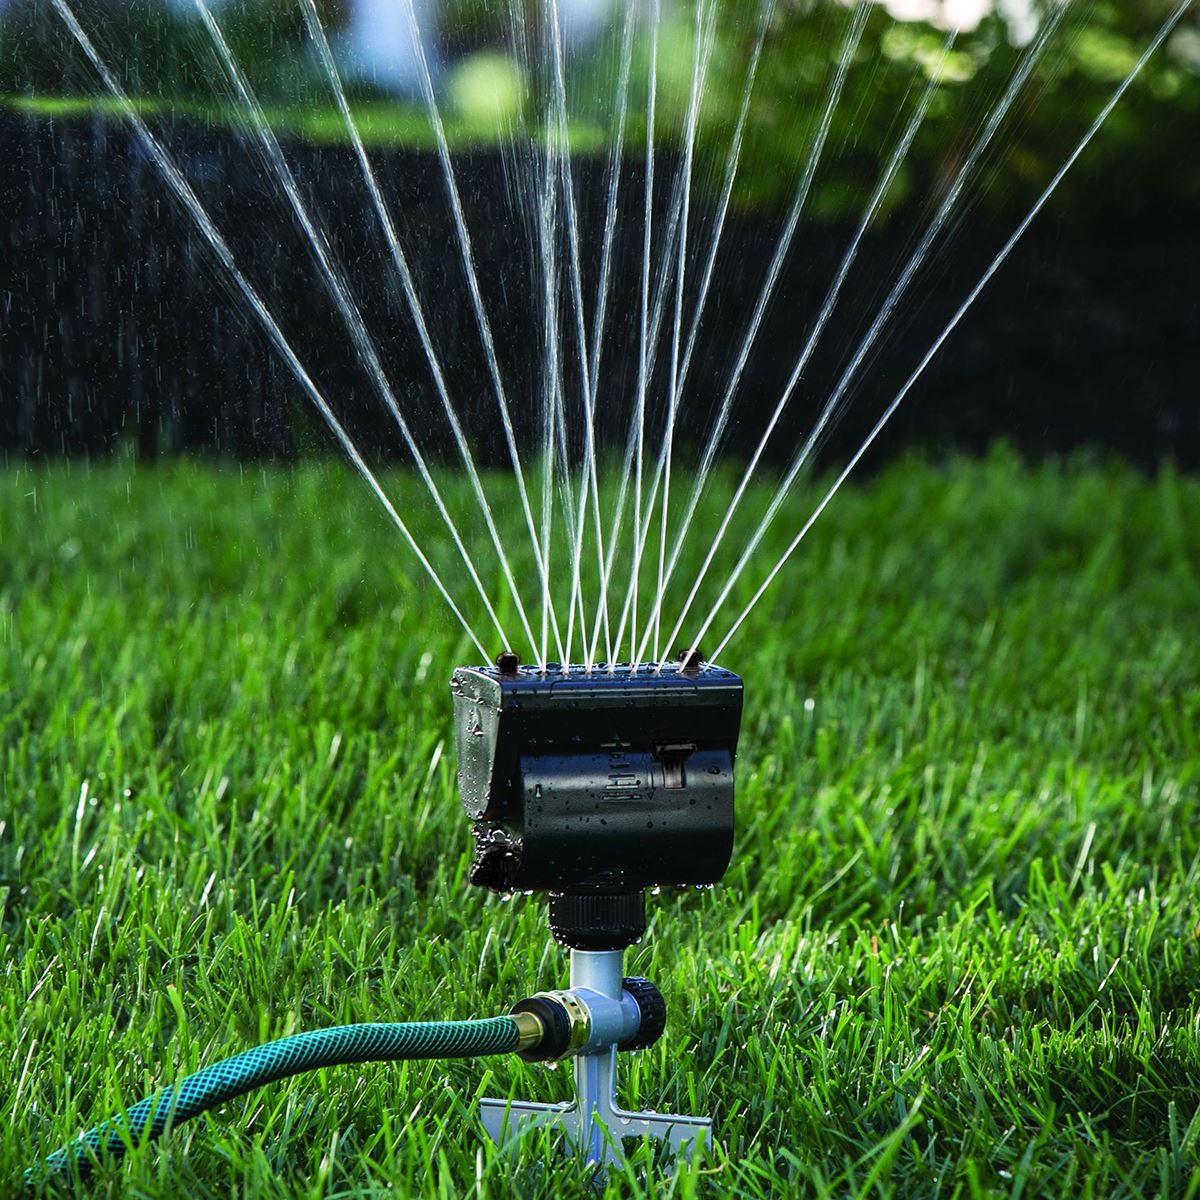 16 Holes Water Spray Nozzle Garden Sprinkler Sprayer Automatic Swing Spray Nozzle Garden Lawn Irrigation Watering Tool